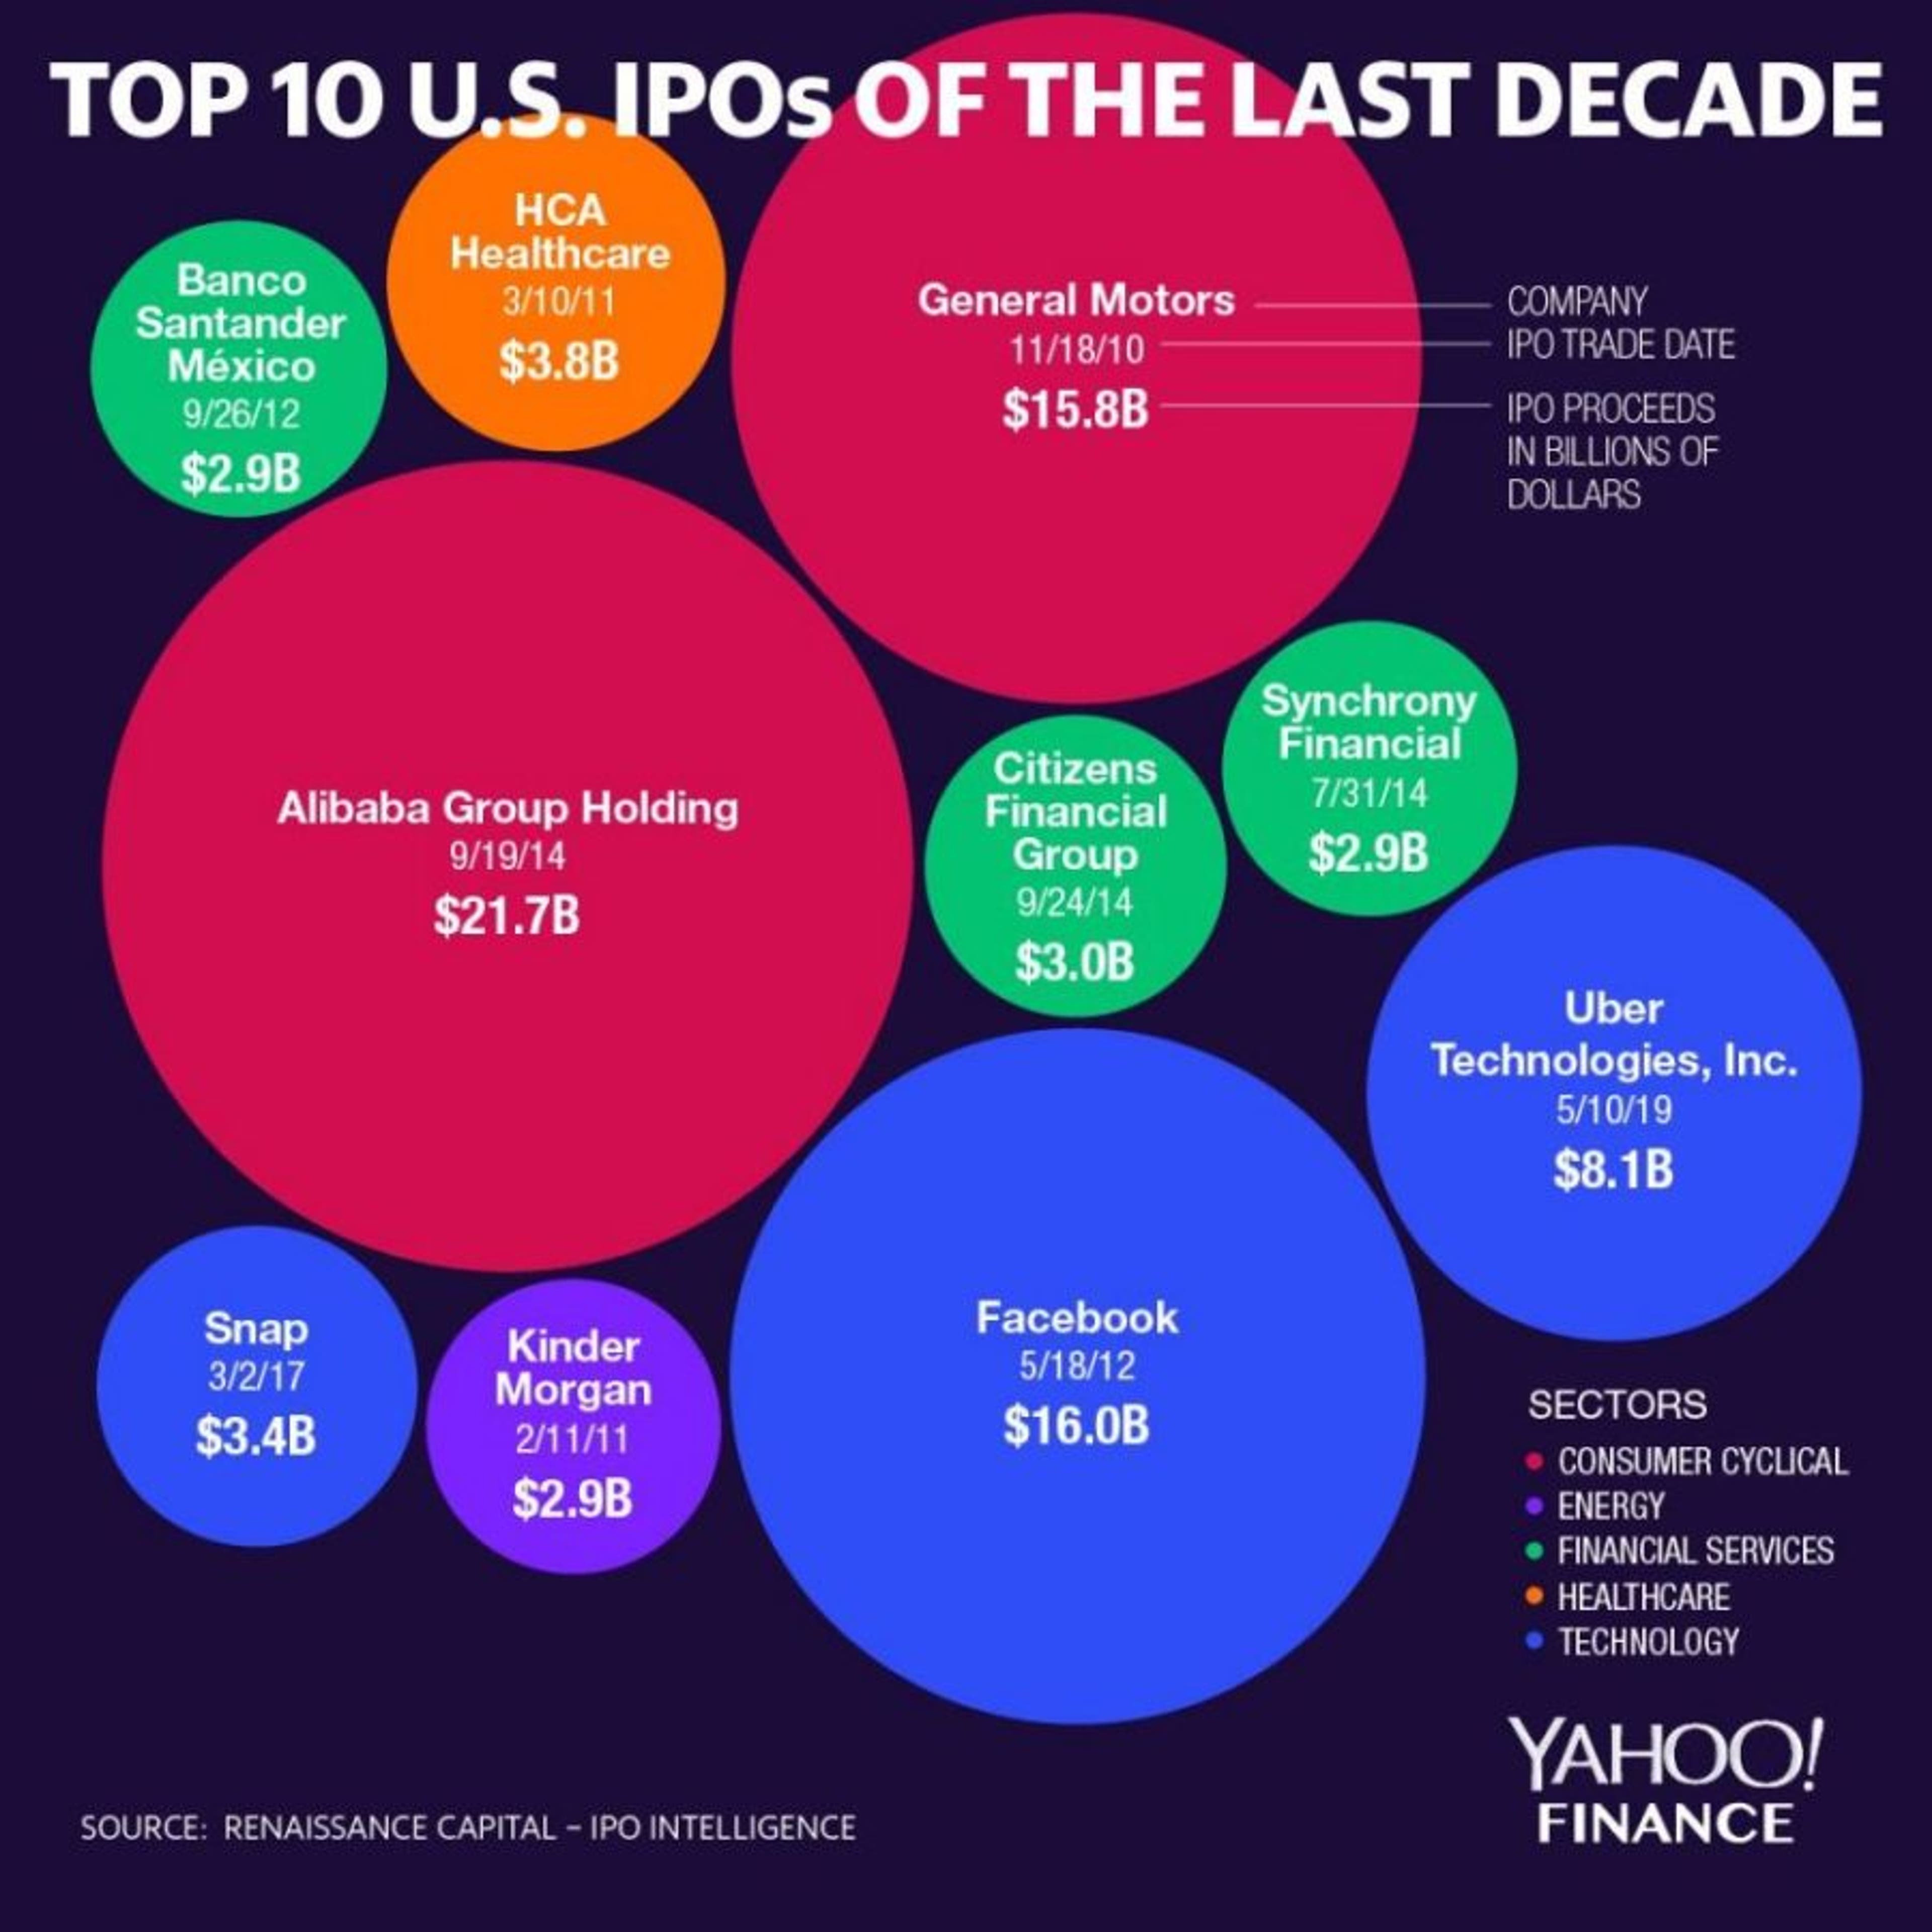 Top 10 U.S. IPOs of the last decade (David Foster/Yahoo Finance)